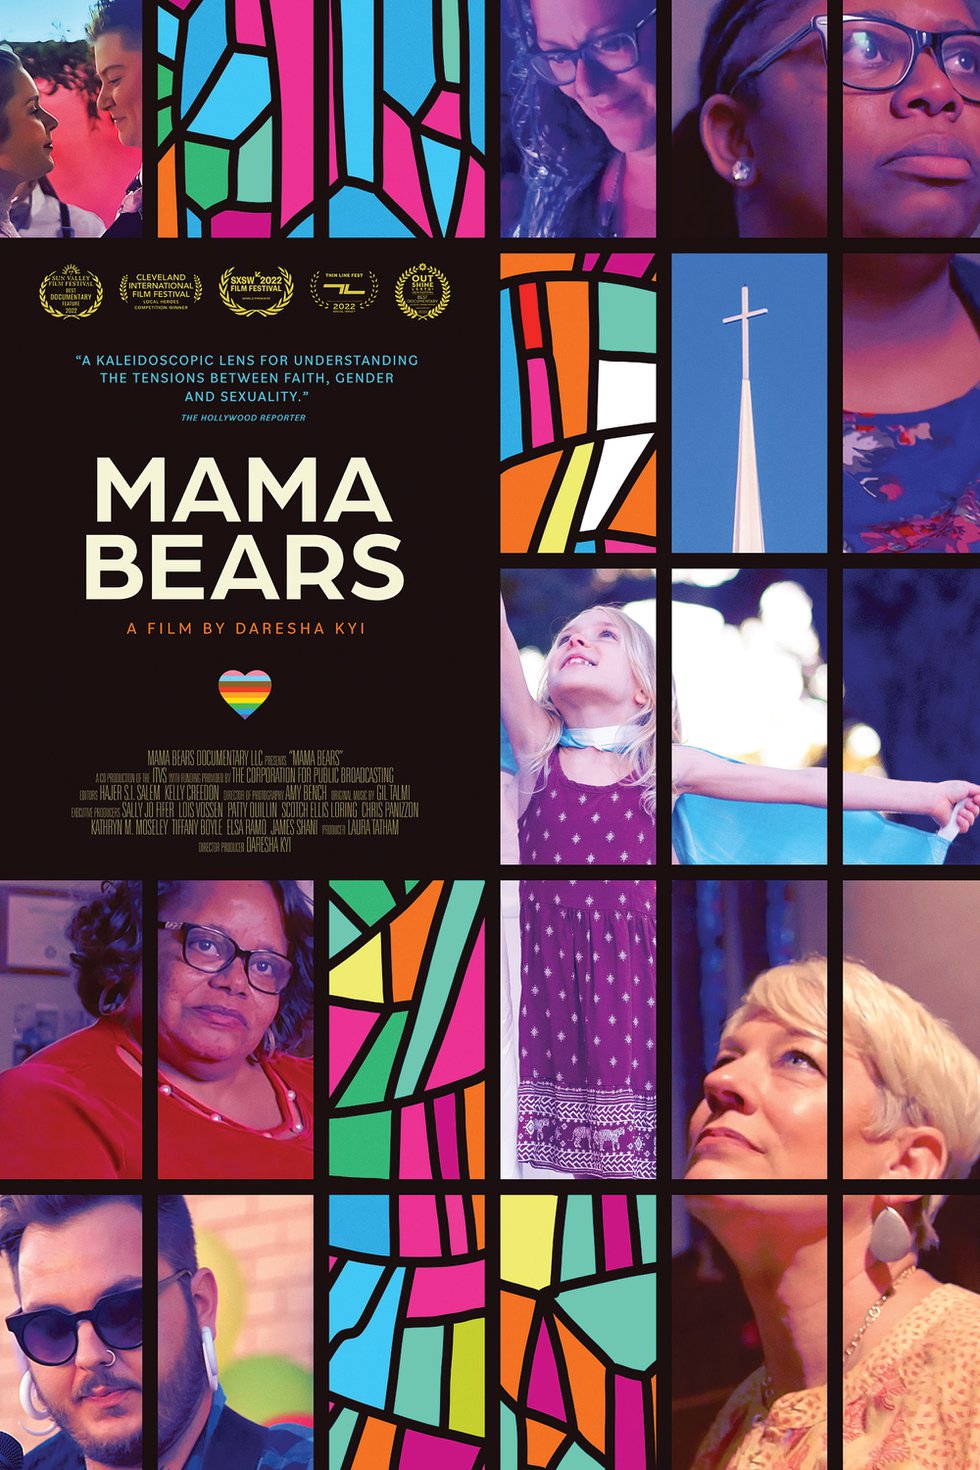 Mama Bears LGBTQ Documentary